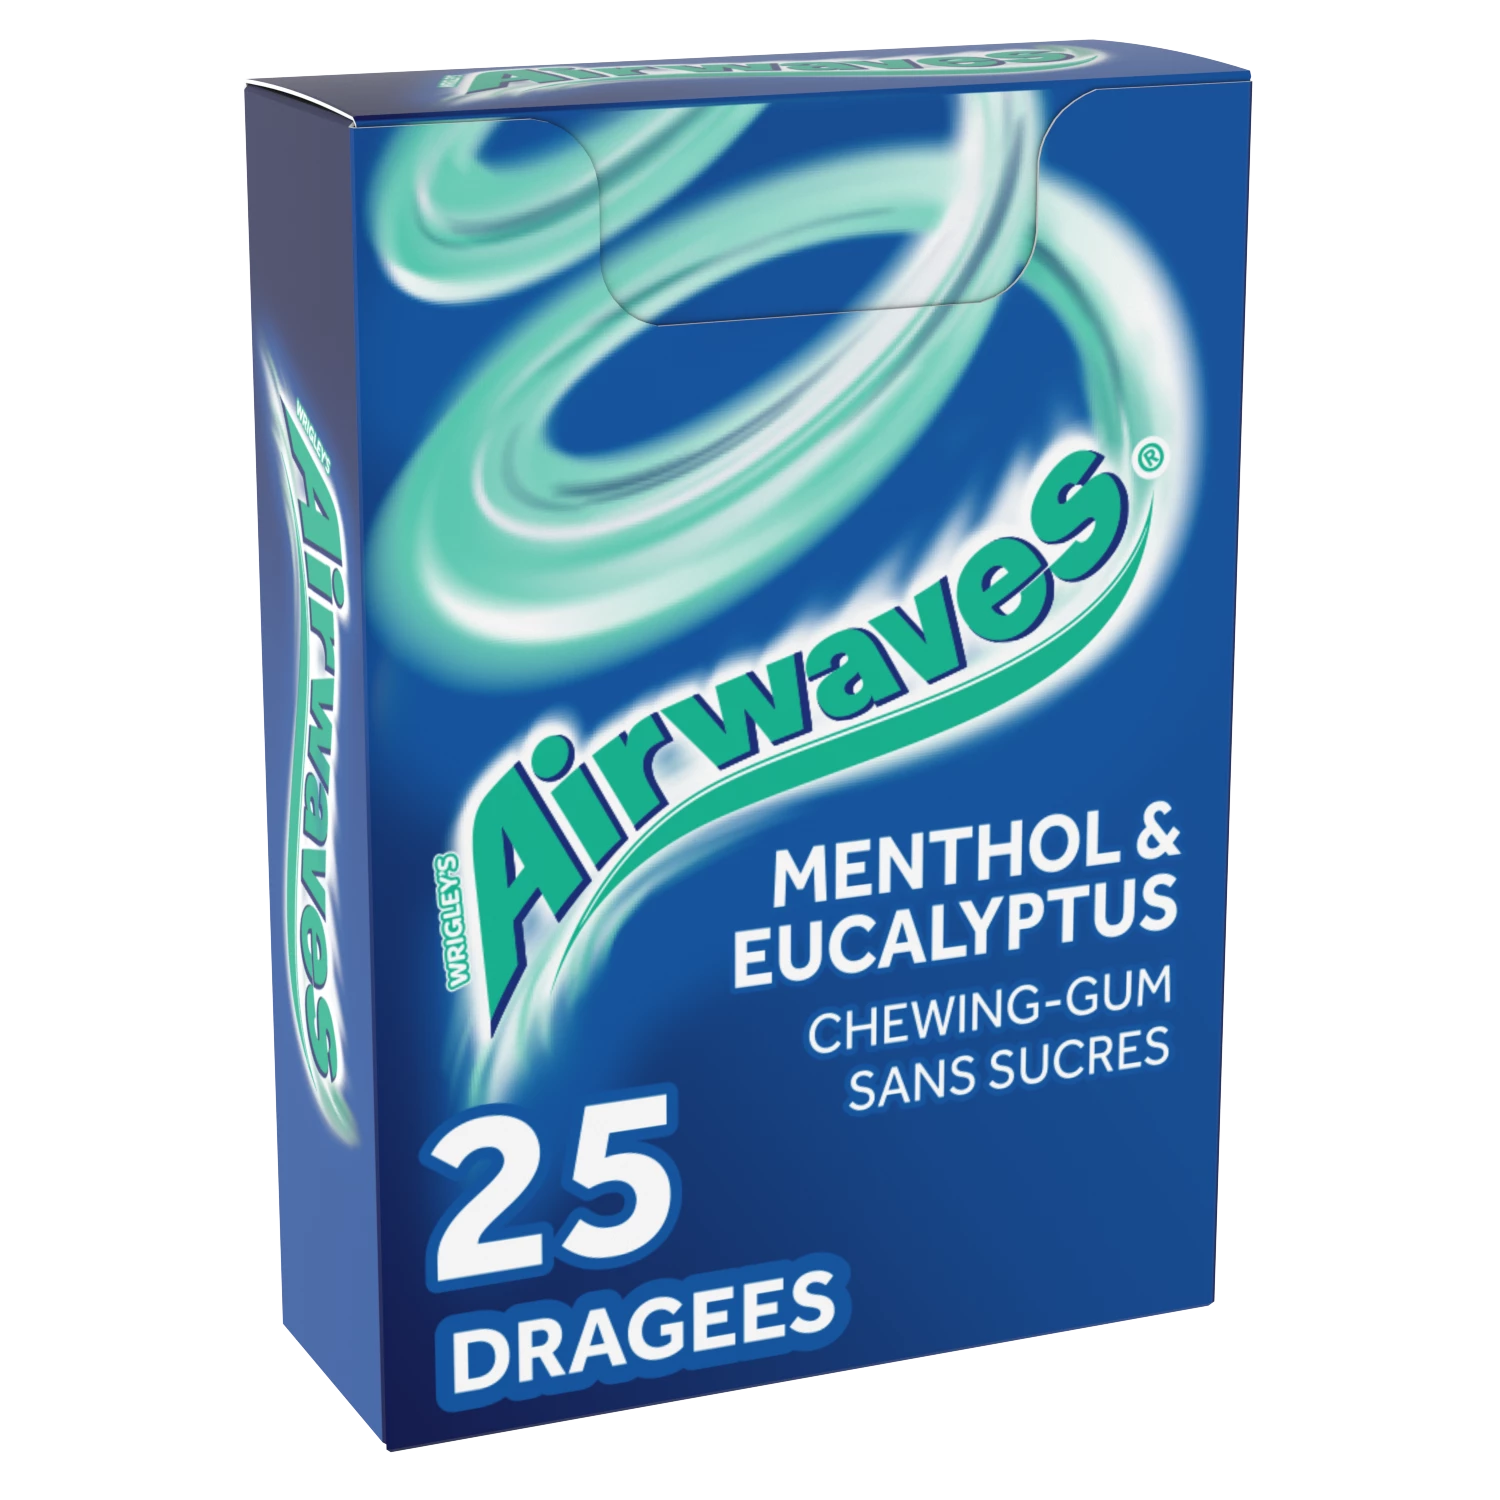 Chewing-gum sans sucres Mentolo Eucalipto - AIRWAVES